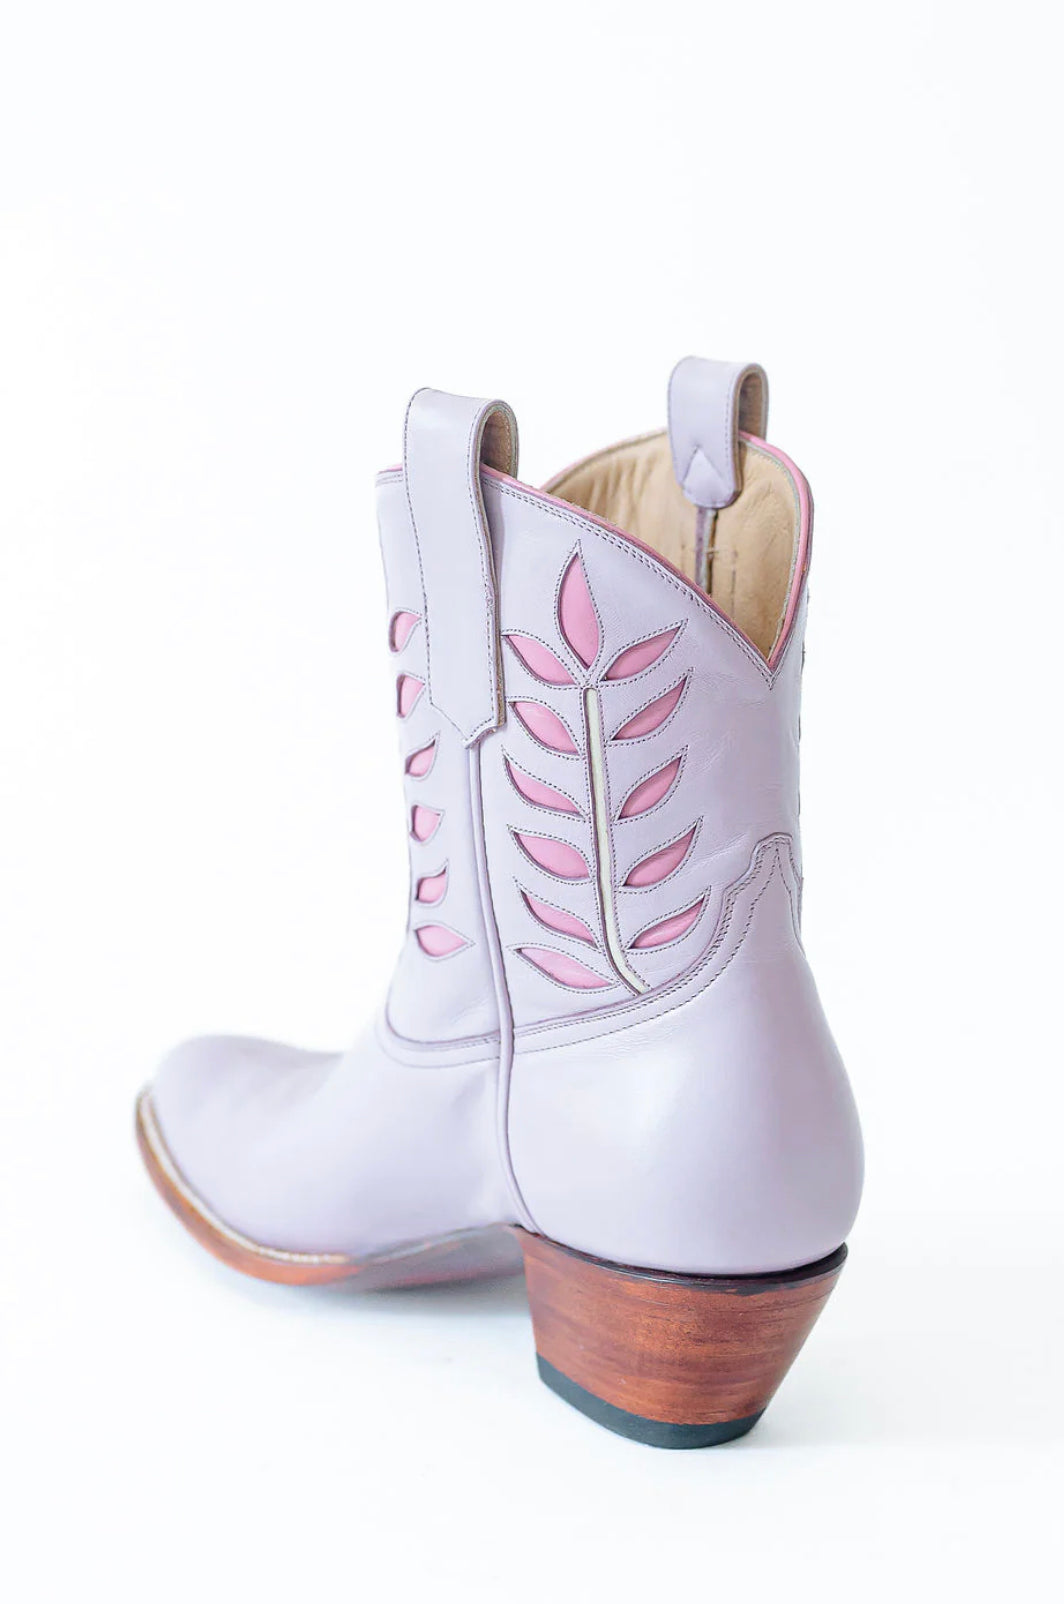 Petite Paloma Hadley Boot - Lavender